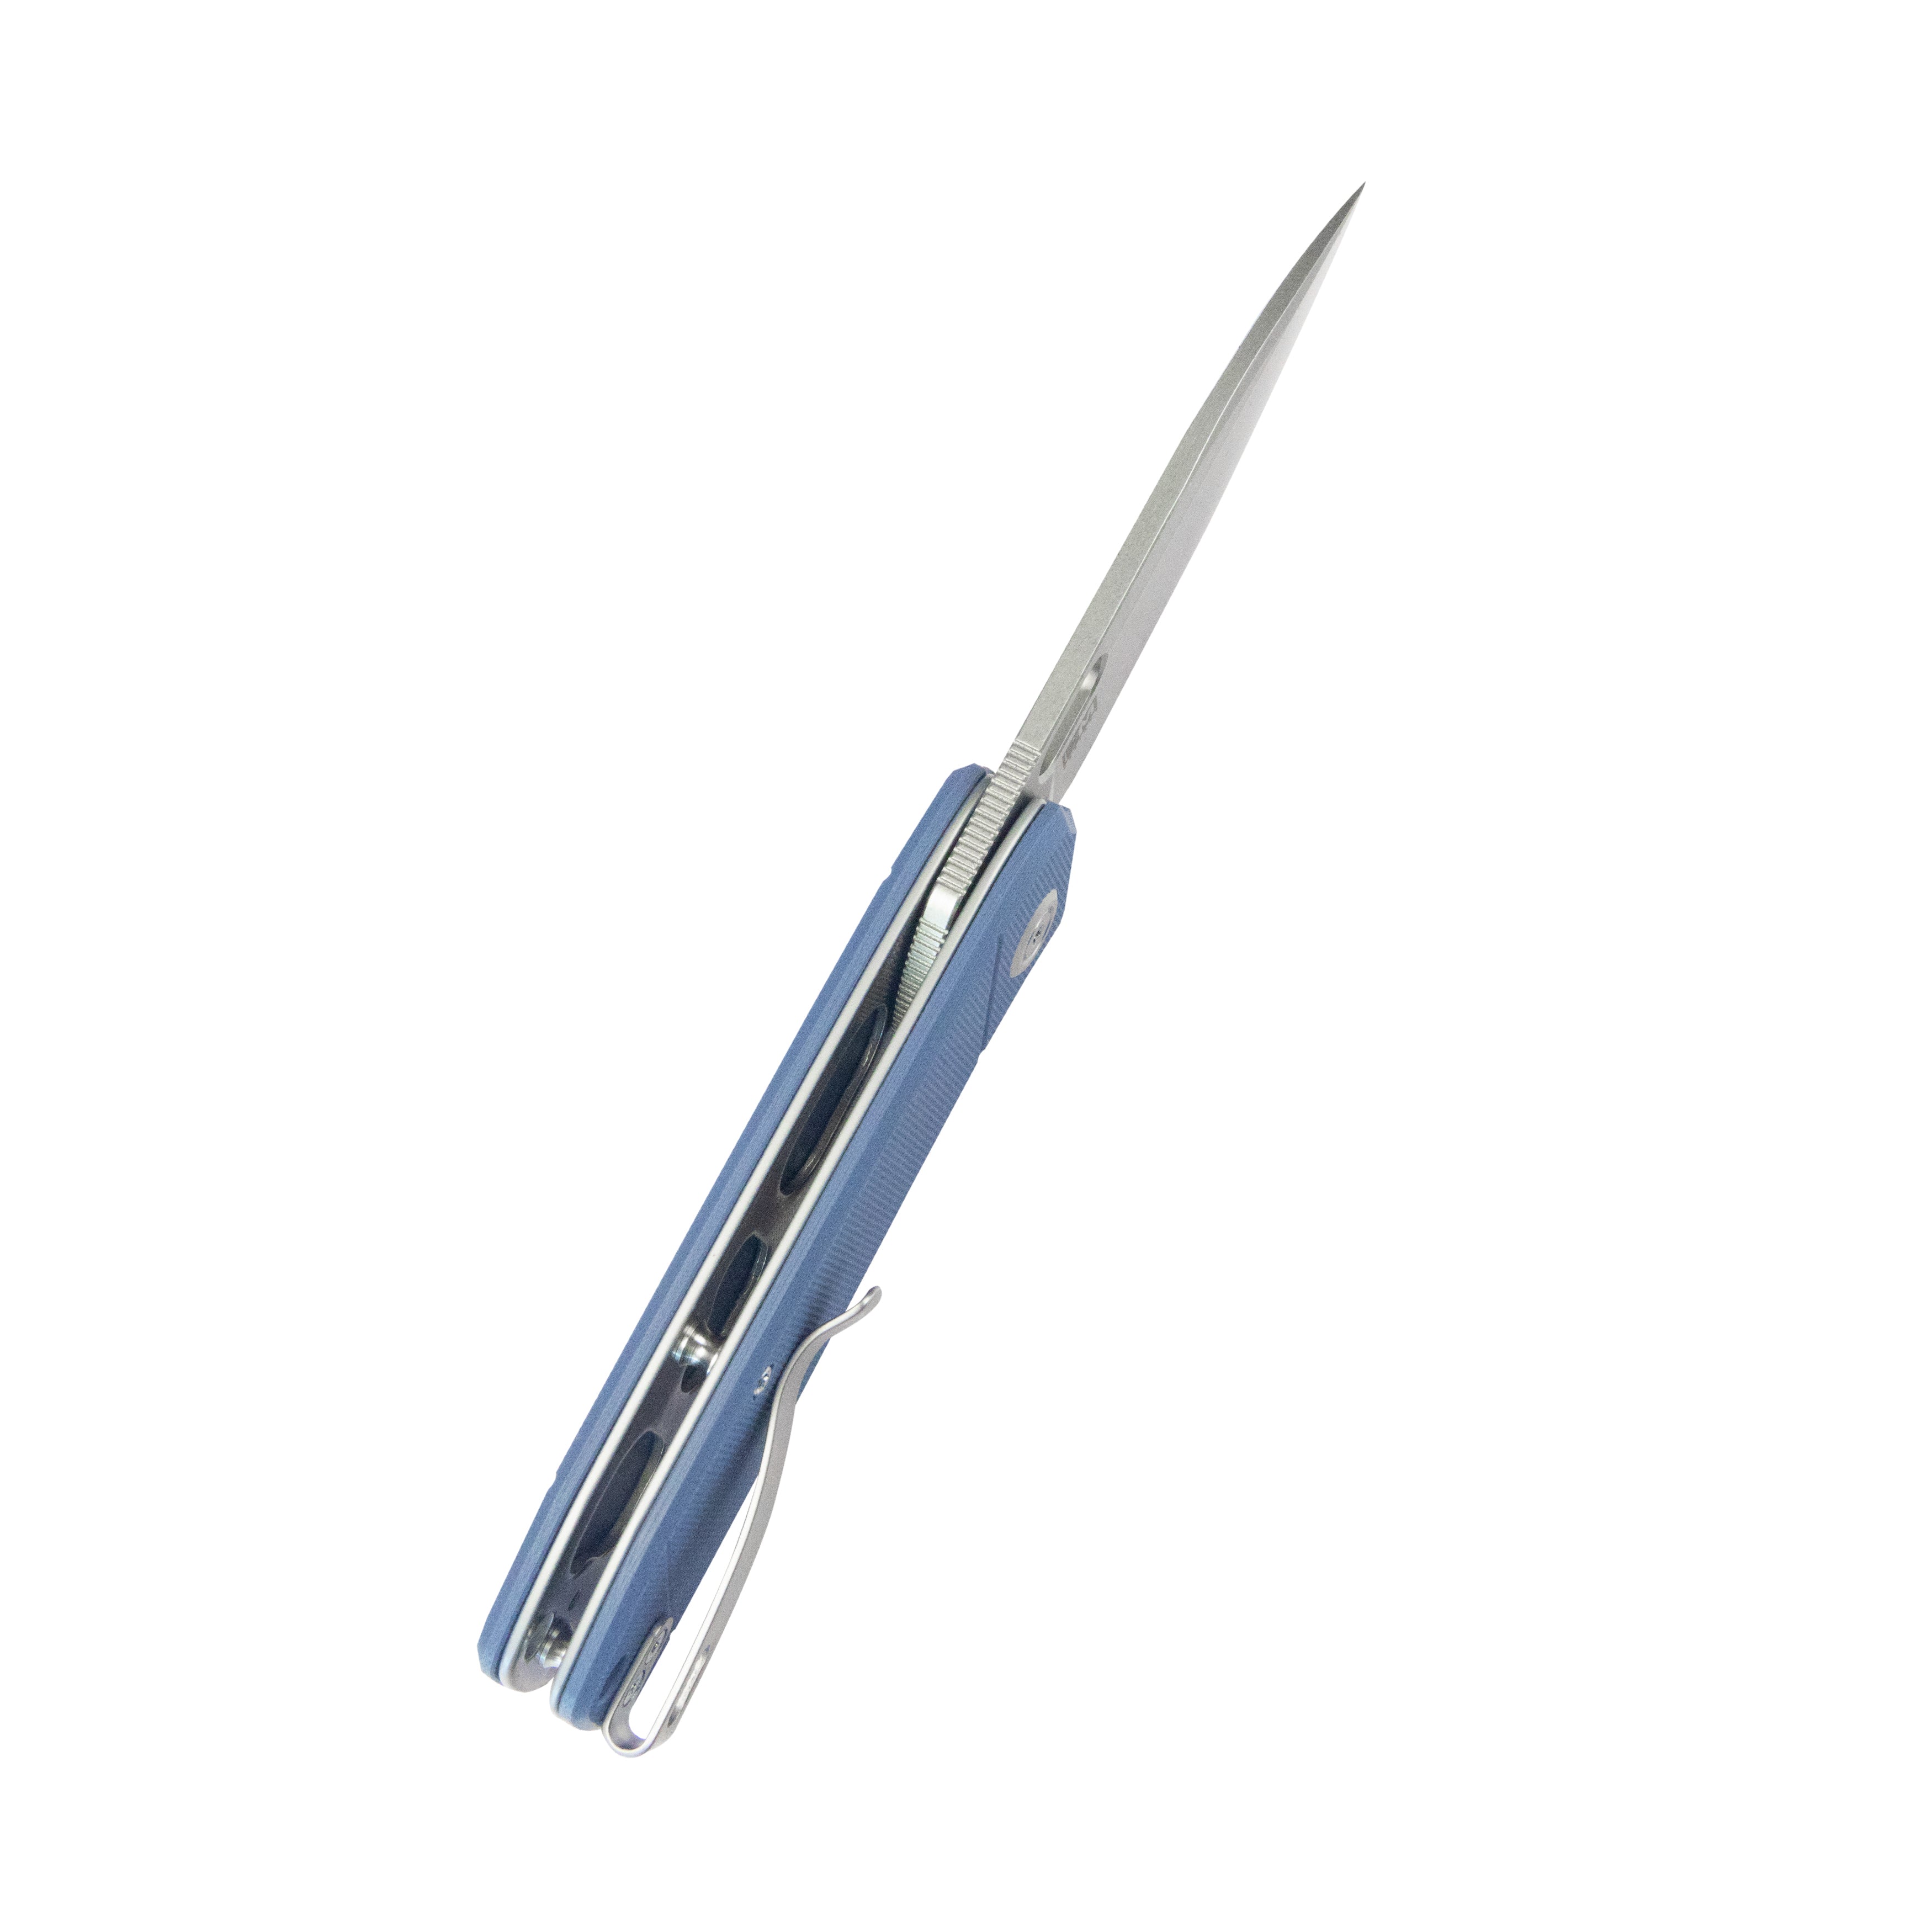 Kubey Hyde Liner Lock Folding Knife Denim Blue G10 Handle 2.95" Sand Blasted 14C28N KU2104D